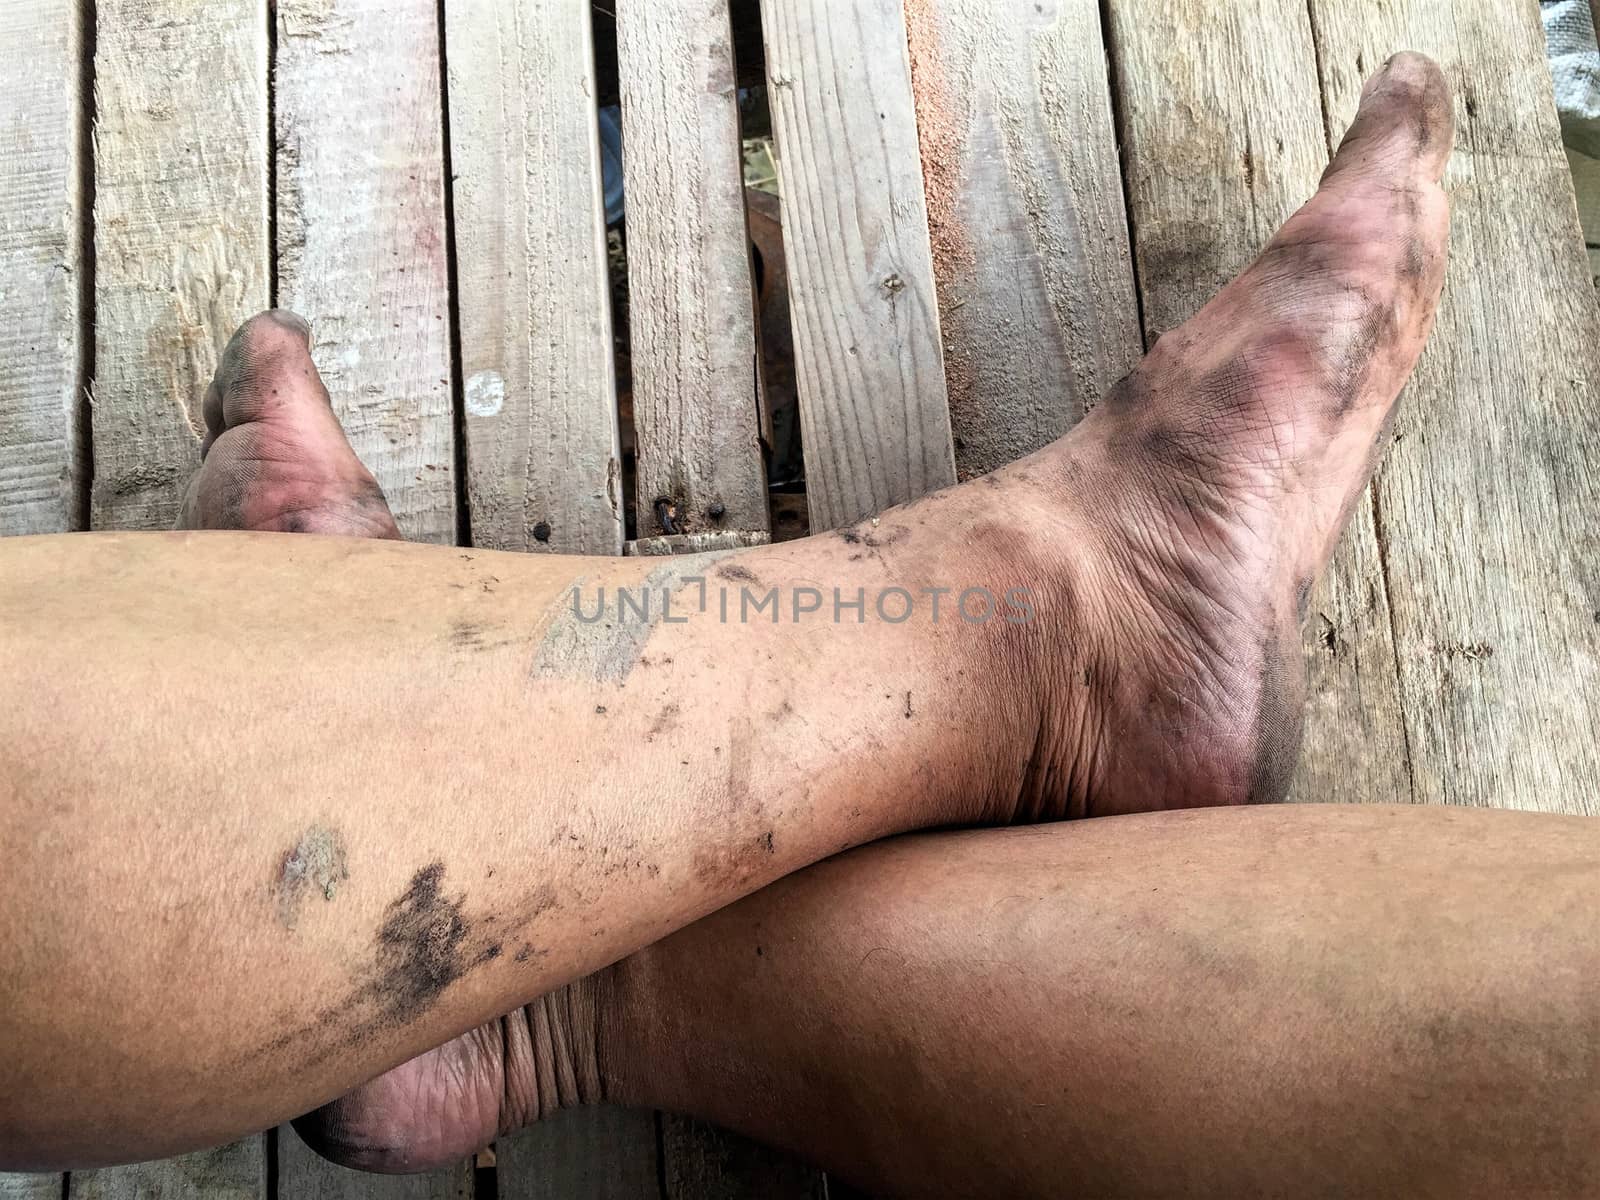 Dirty feet on the wooden floor by e22xua